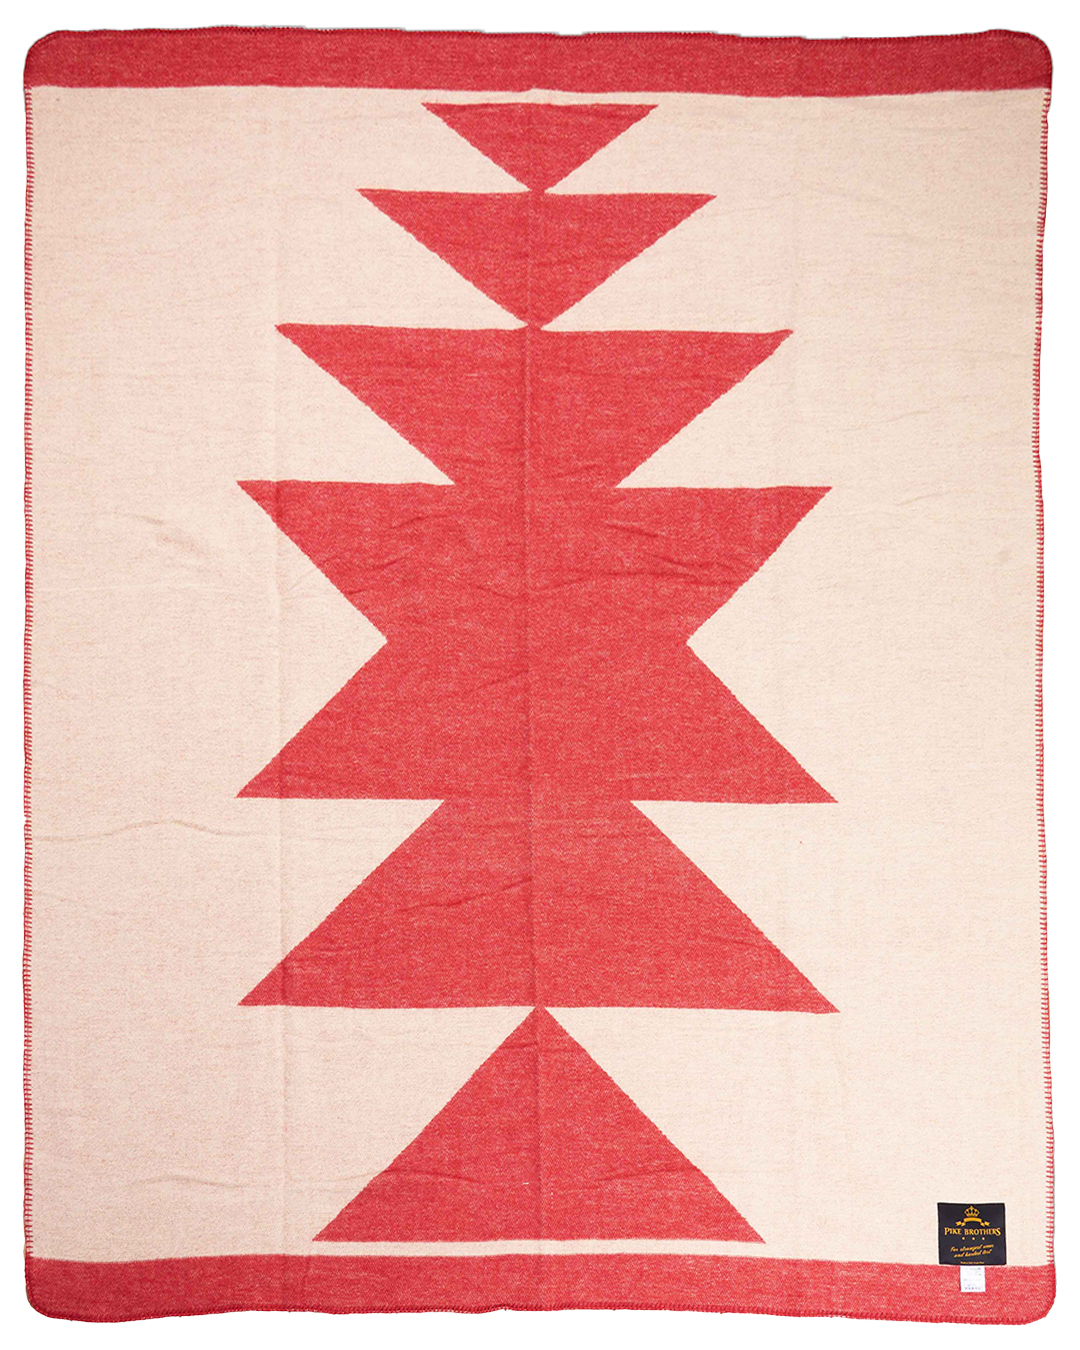 1969 Tolani wool blanket red